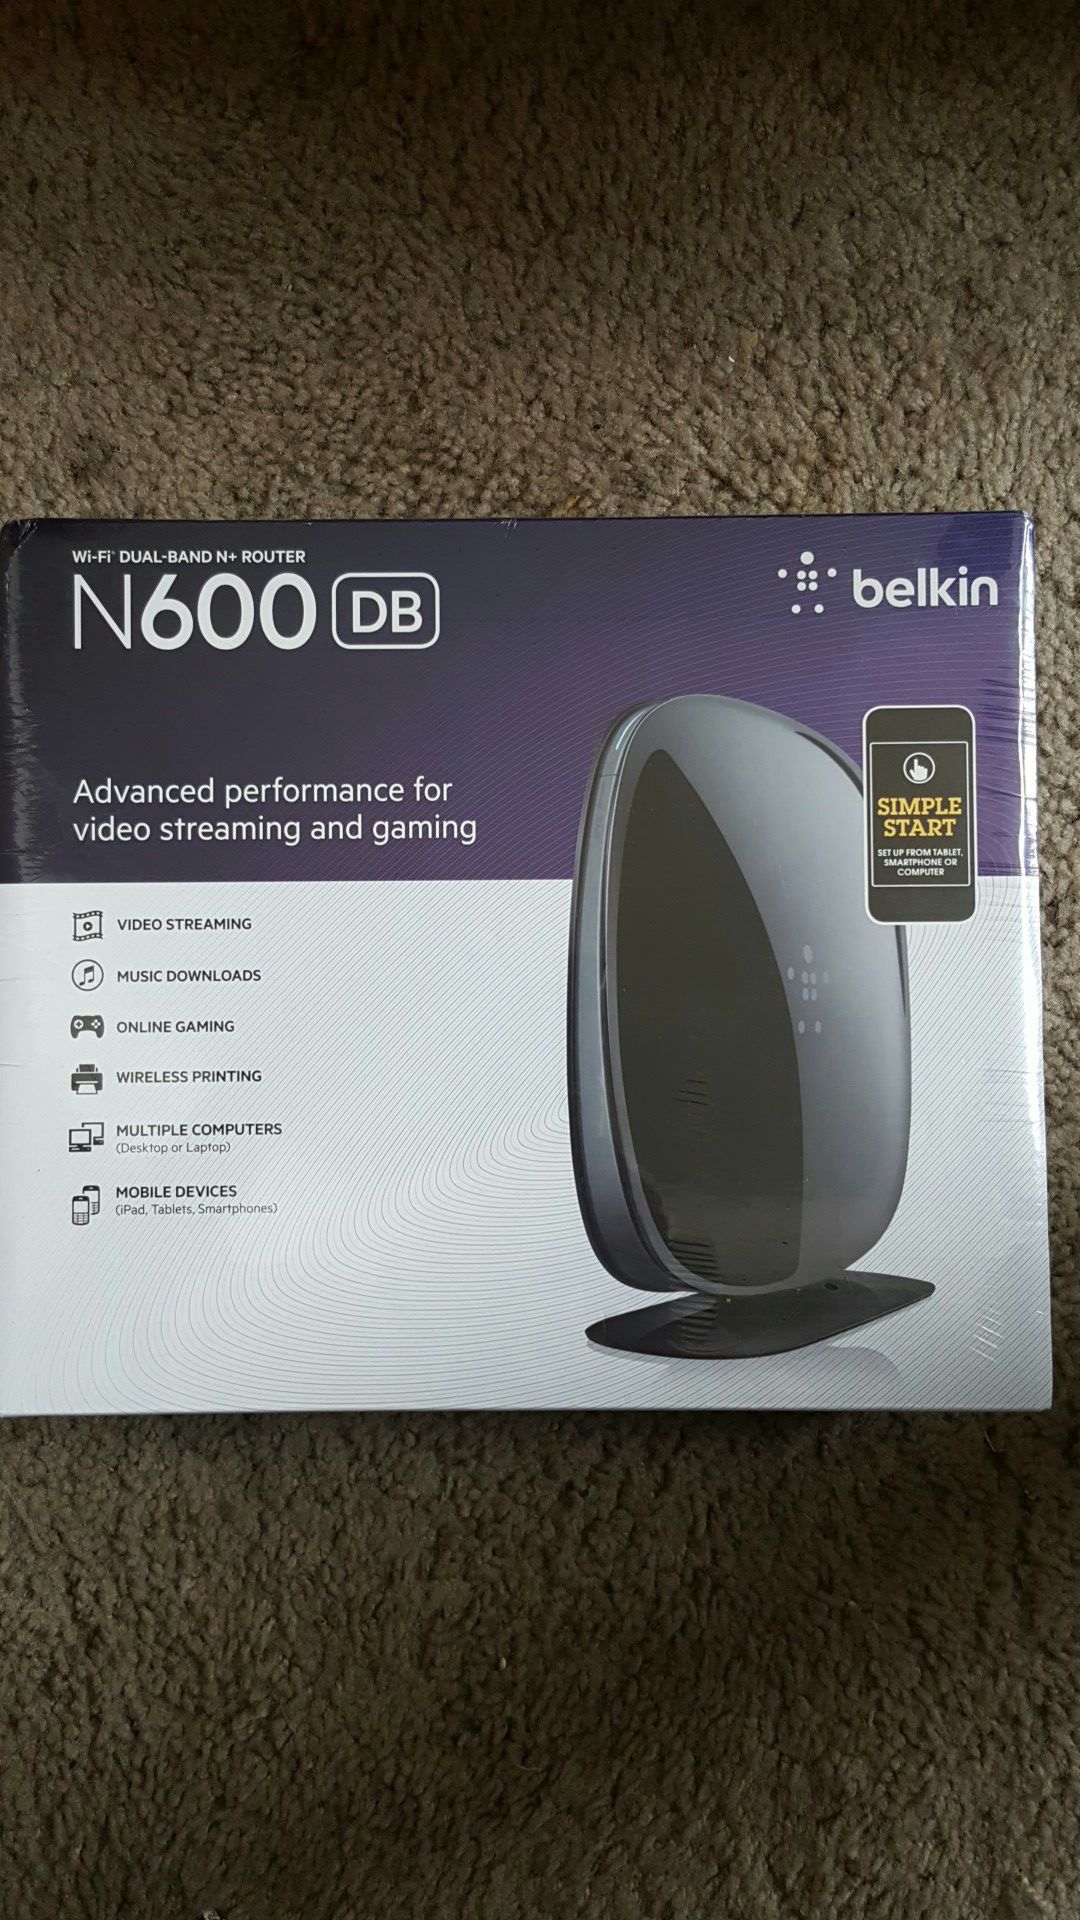 NEW!!! Belkin * N600 DB Wireless Dual Band N+ Router